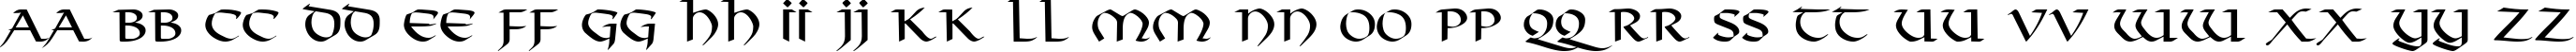 Пример написания английского алфавита шрифтом Viking